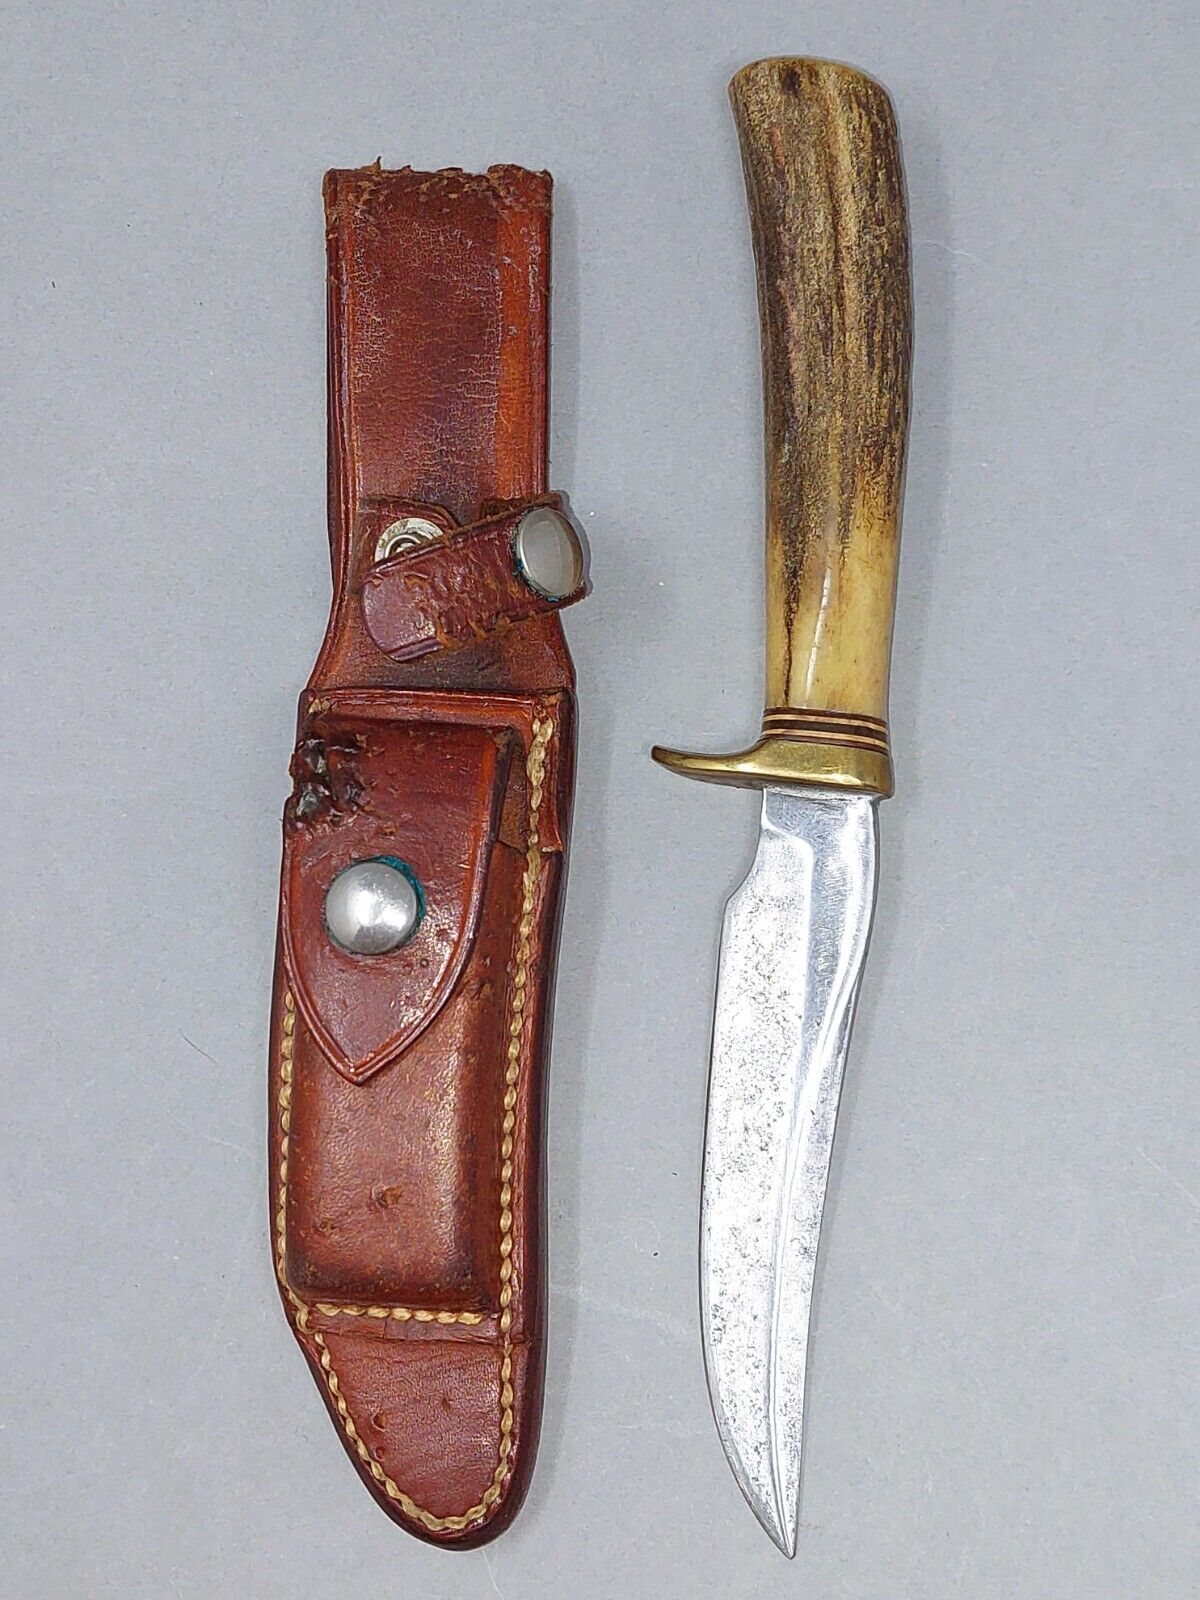 1960s VIETNAM-ERA VINTAGE RANDALL-MADE KNIFE model 7-5 STAG HANDLE